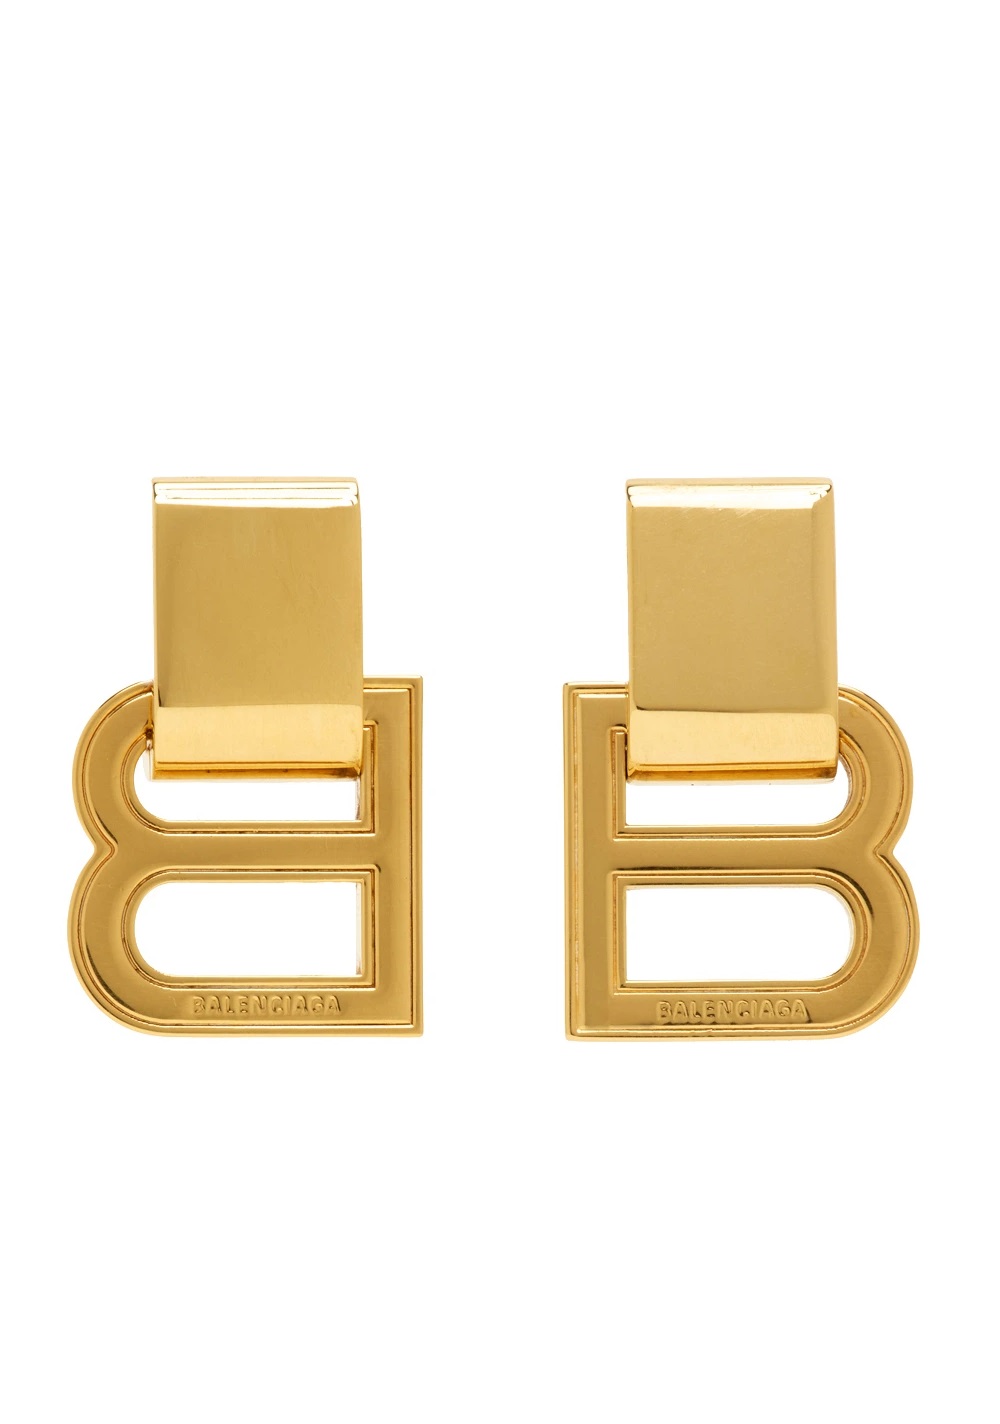 Balenciaga Gold Hourglass Earrings  SSENSE